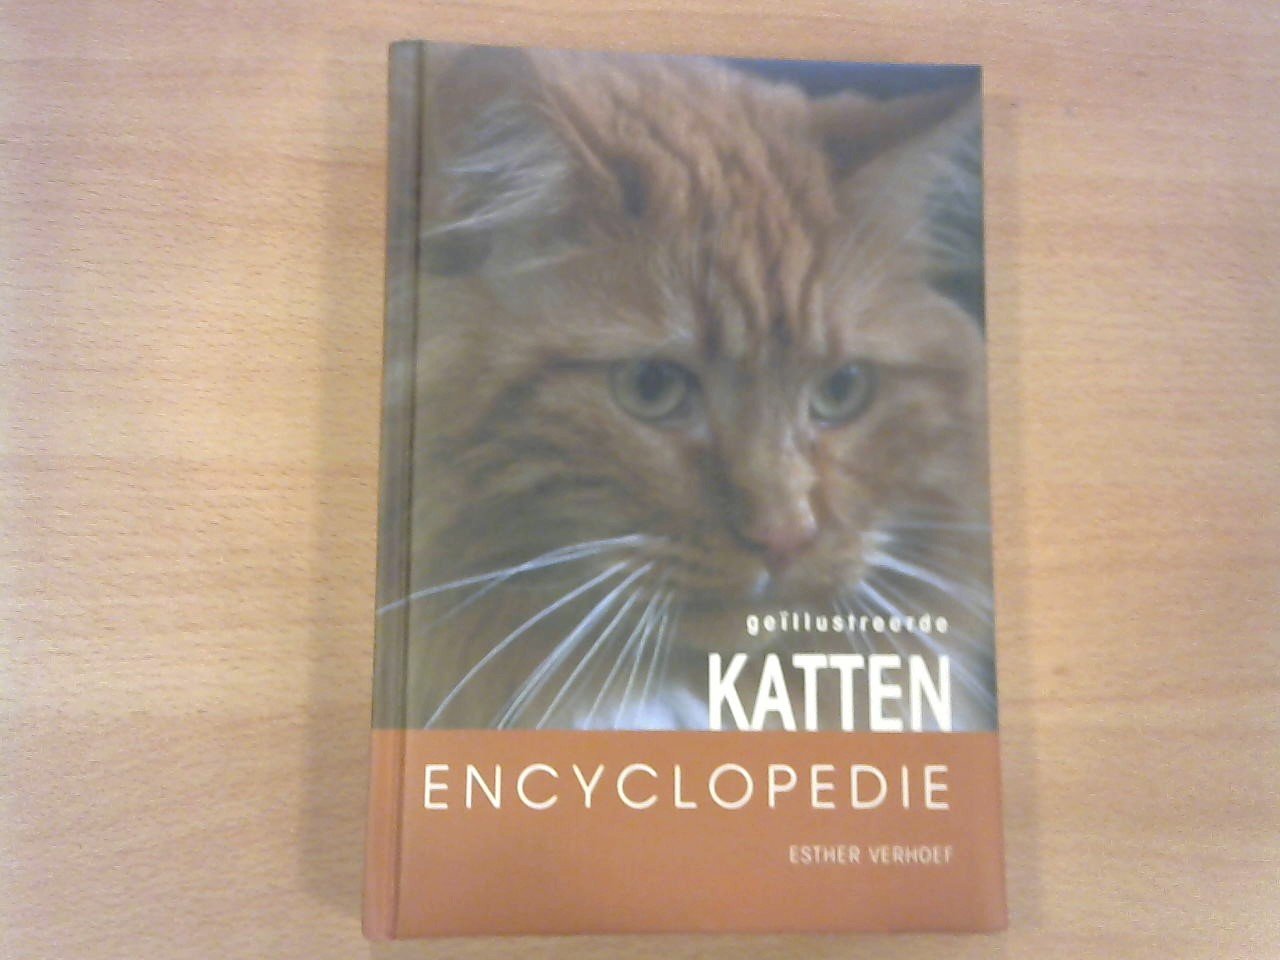 Verhoef, Esther (tekst en fotografie) - Katten encyclopedie